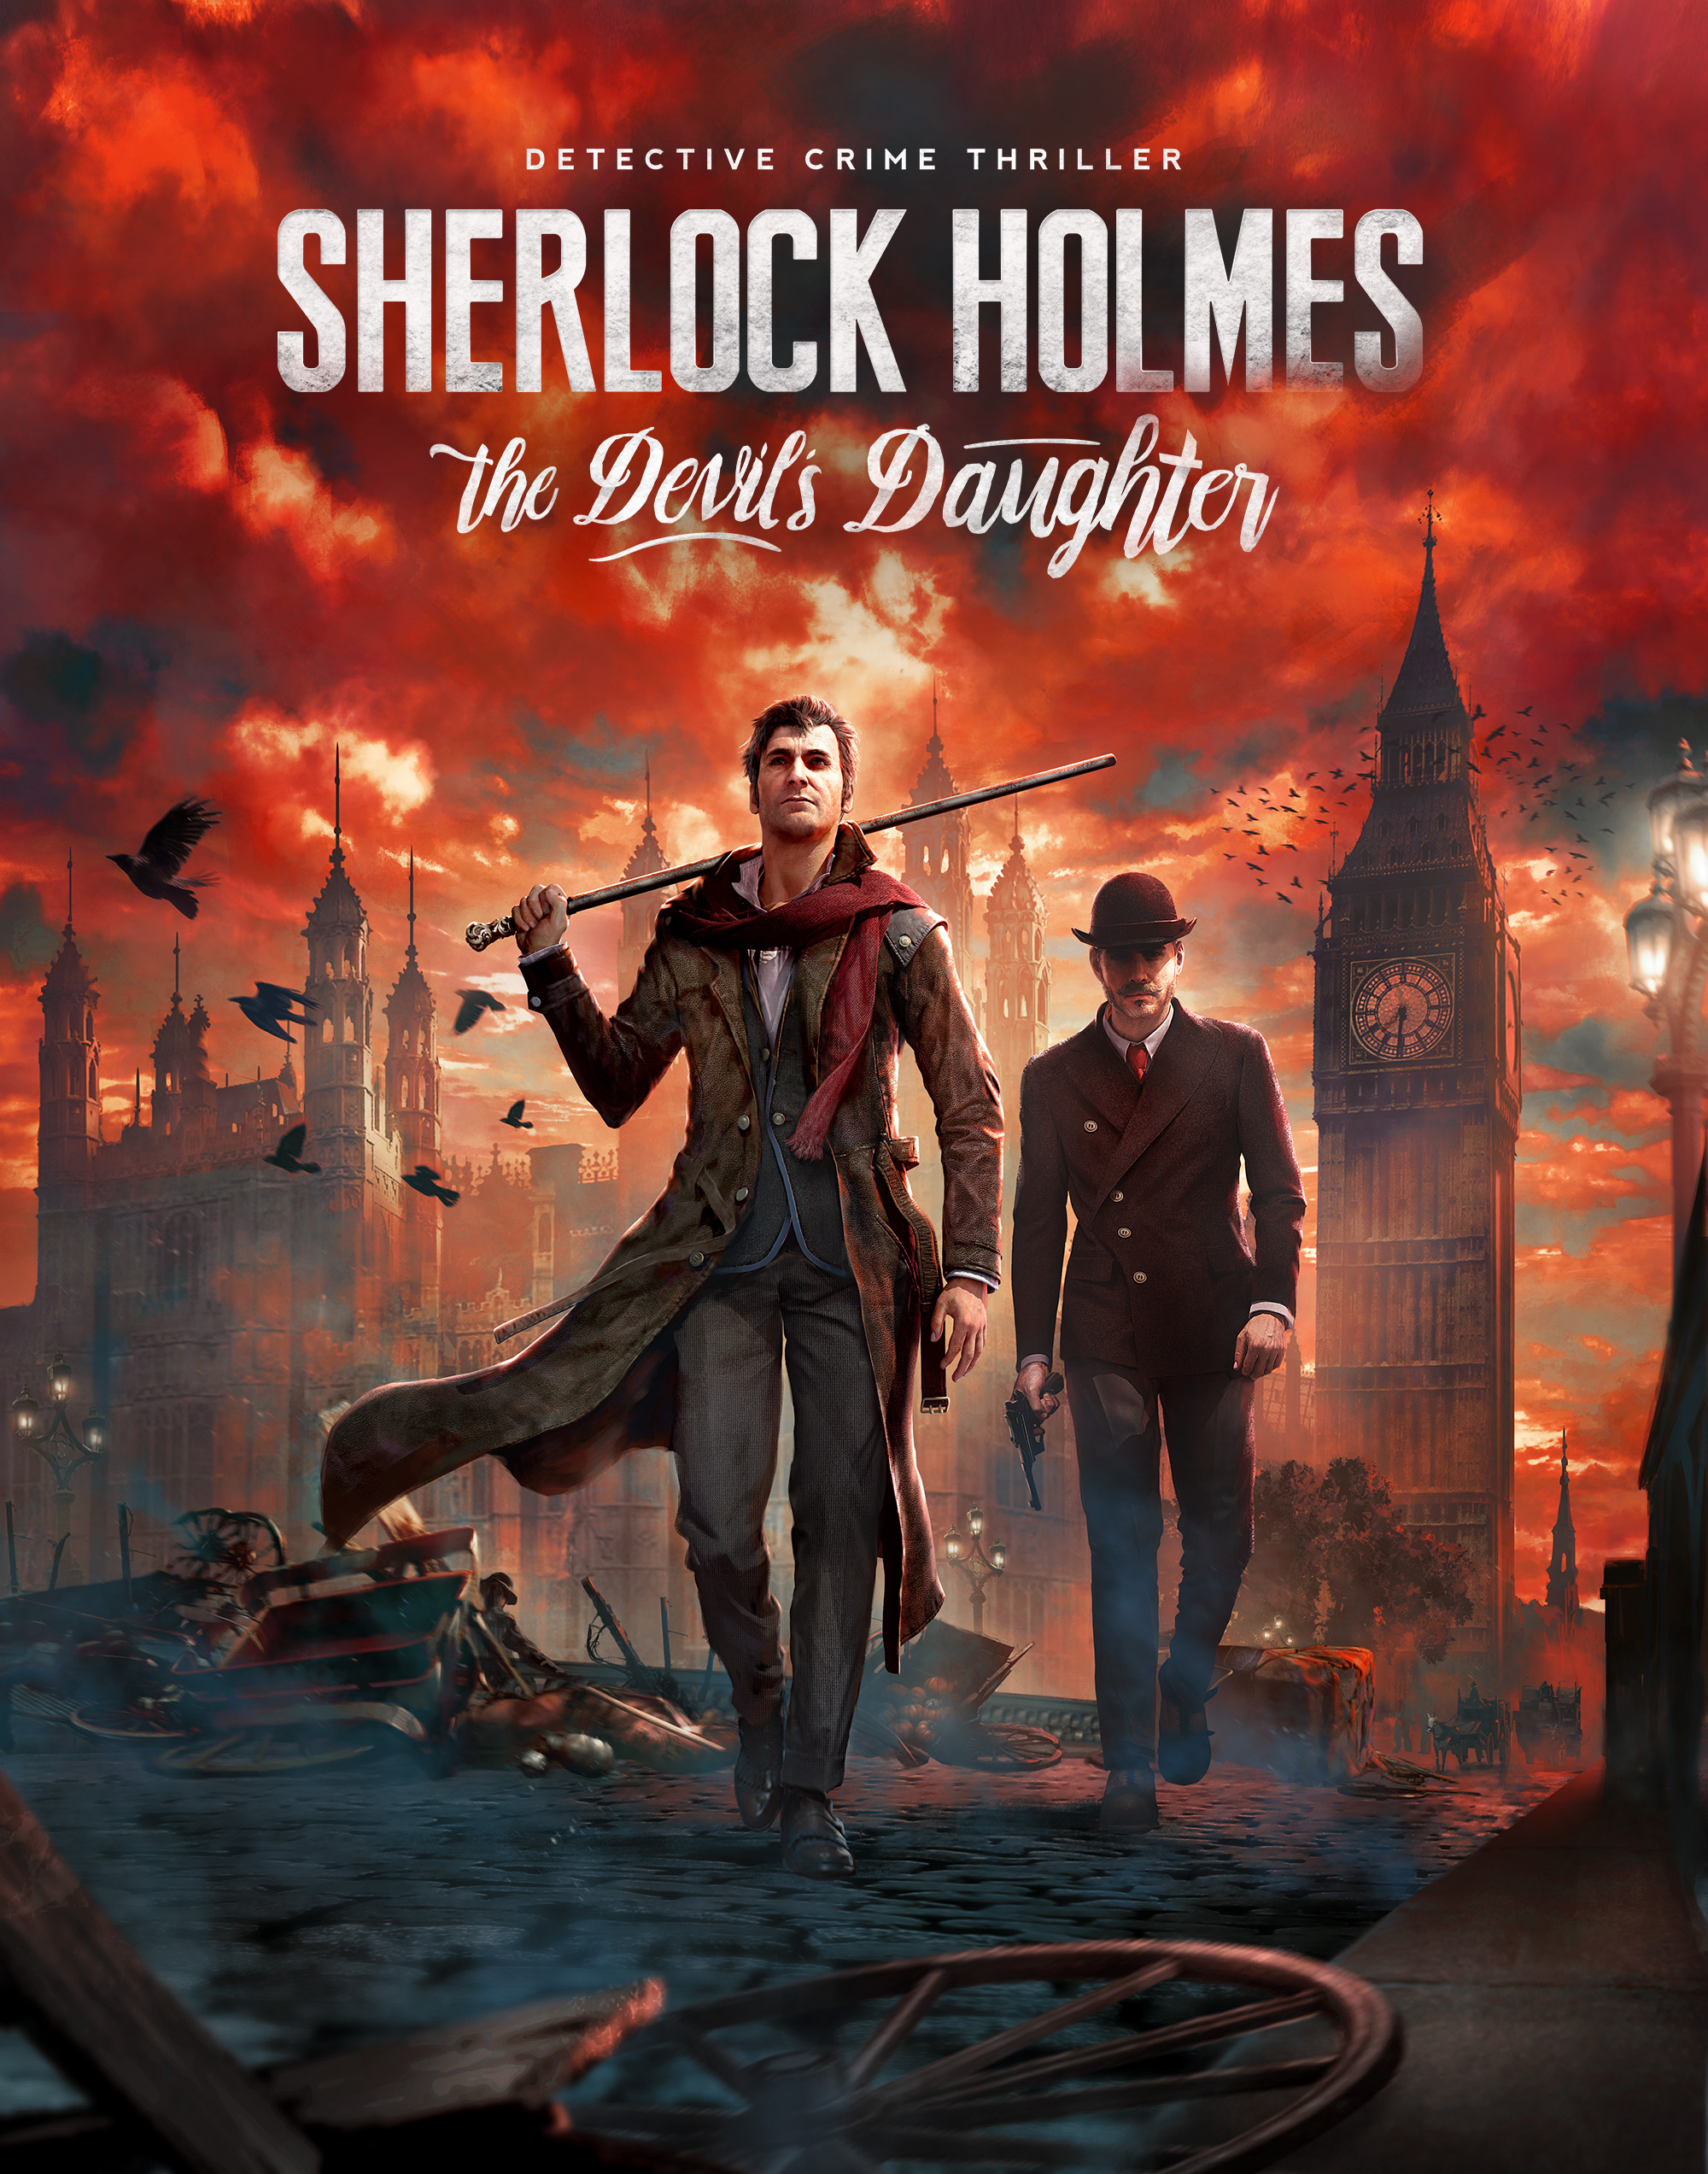 High Resolution Wallpaper | Sherlock Holmes: The Devil's Daughter 2000x2545 px